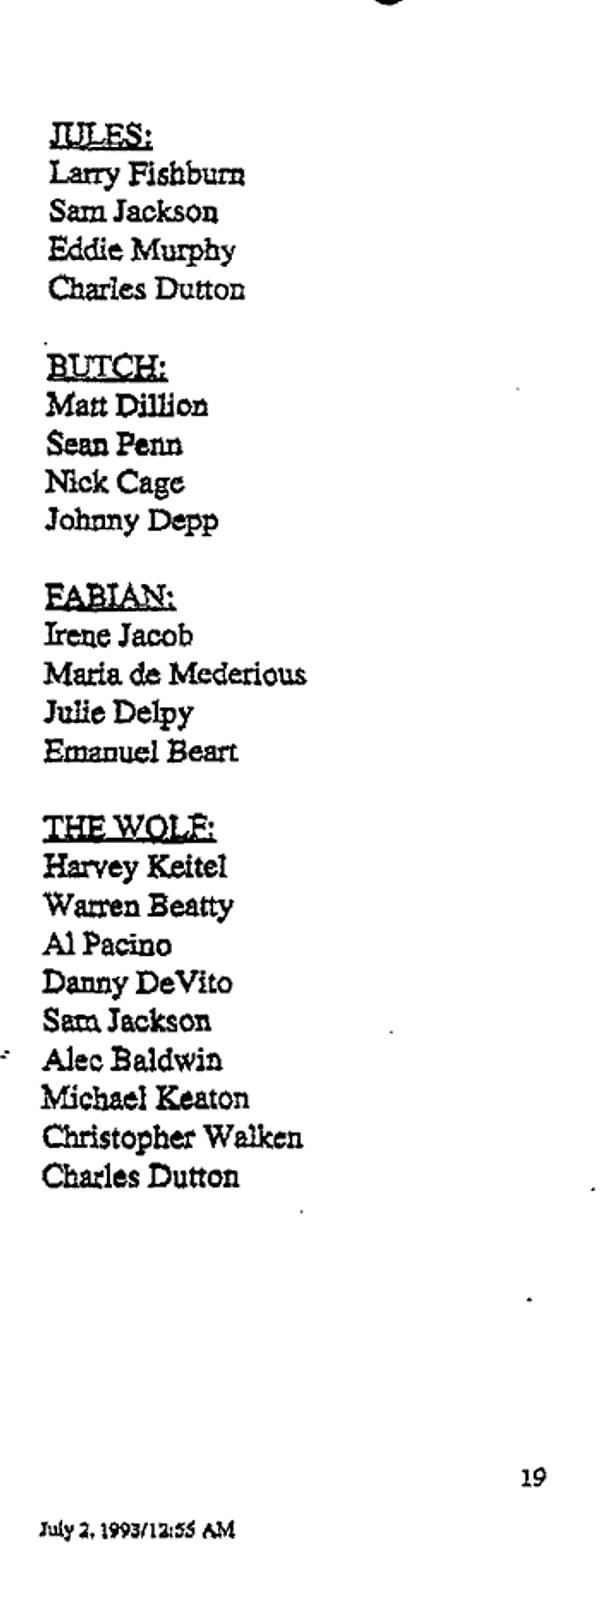 Harvey Keitel, Tarantino’nun “The Wolf” için düşündüğü ilk isim olmuş